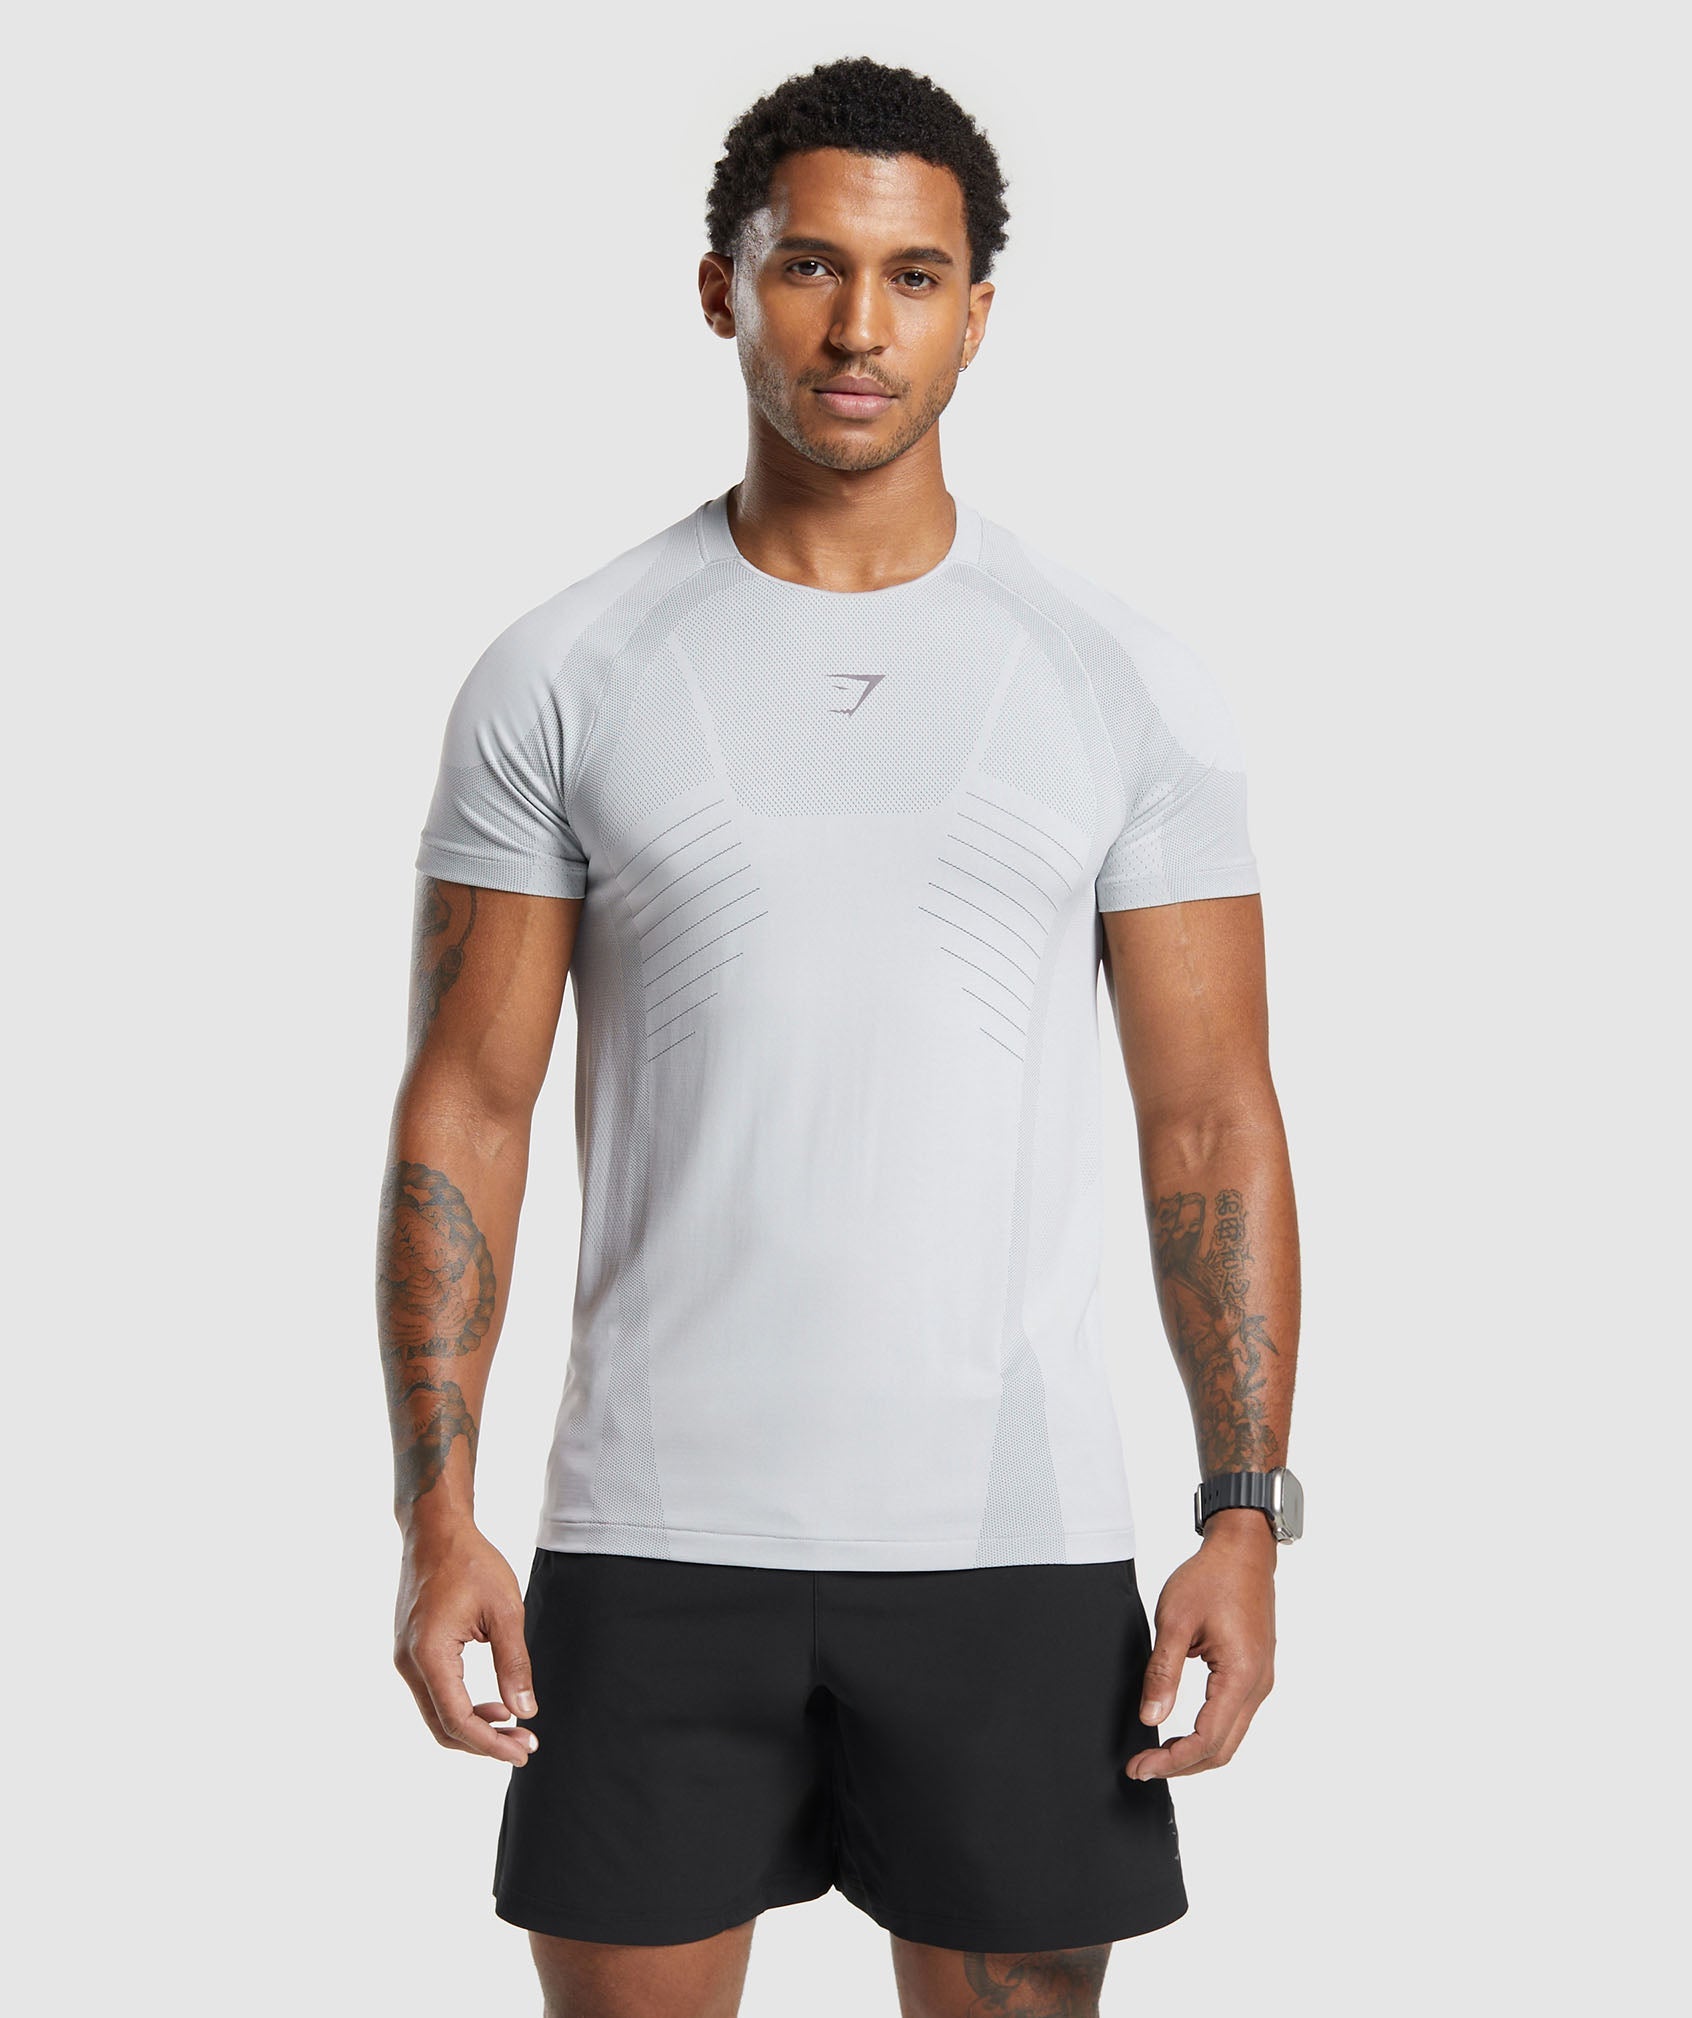 Apex Seamless T-Shirt in Light Grey/Medium Grey - view 1